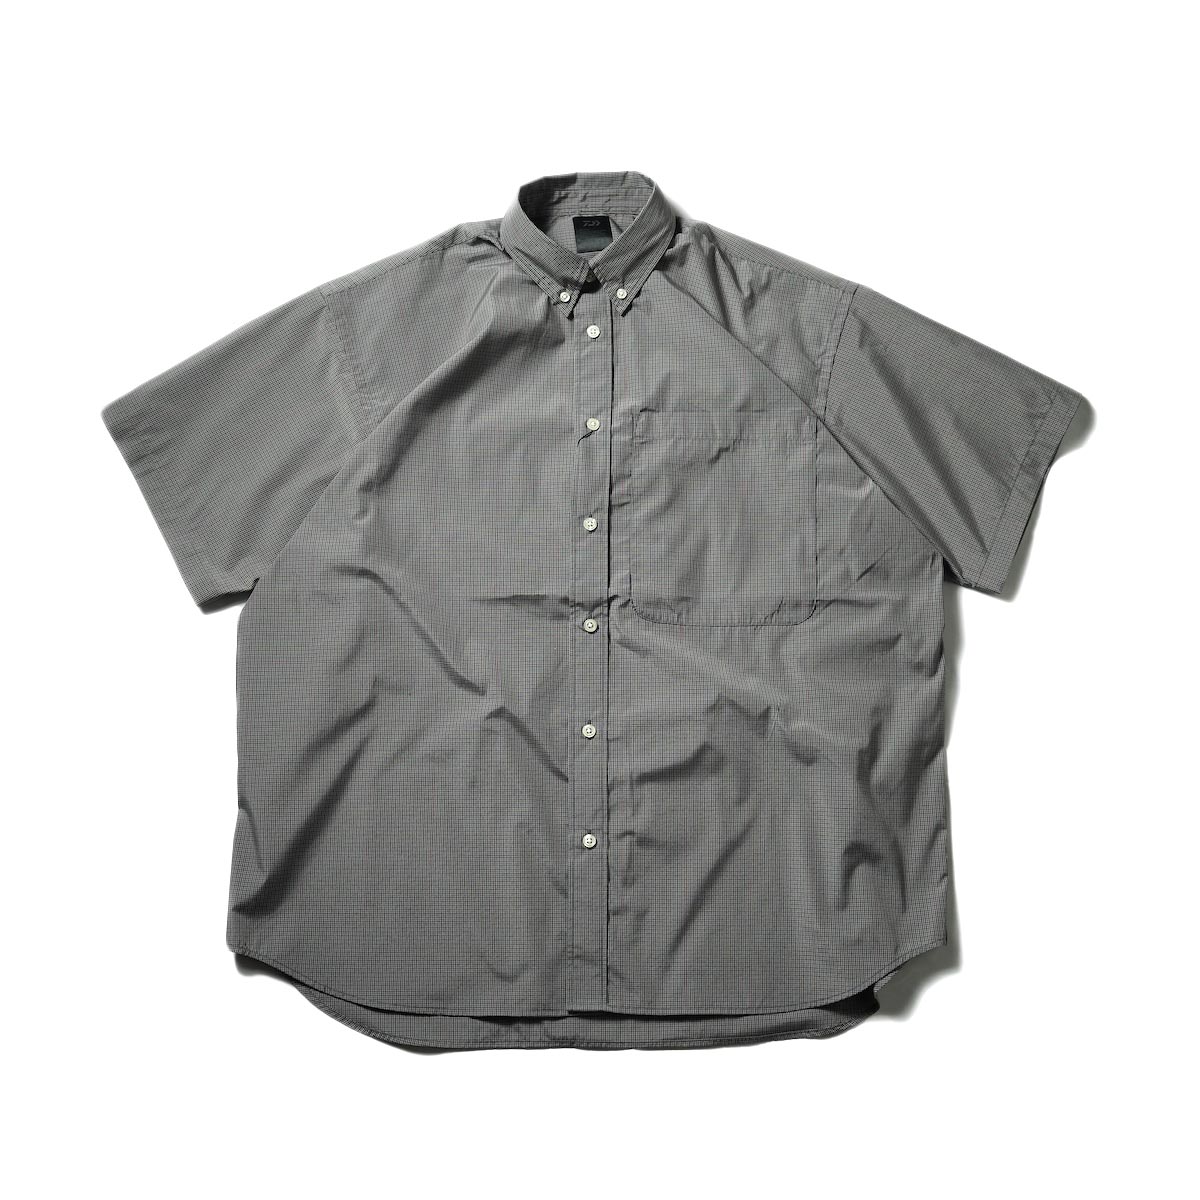 DAIWA PIER39 / Tech Regular Collar Shirts S/S Gun club Plaids (Gray)